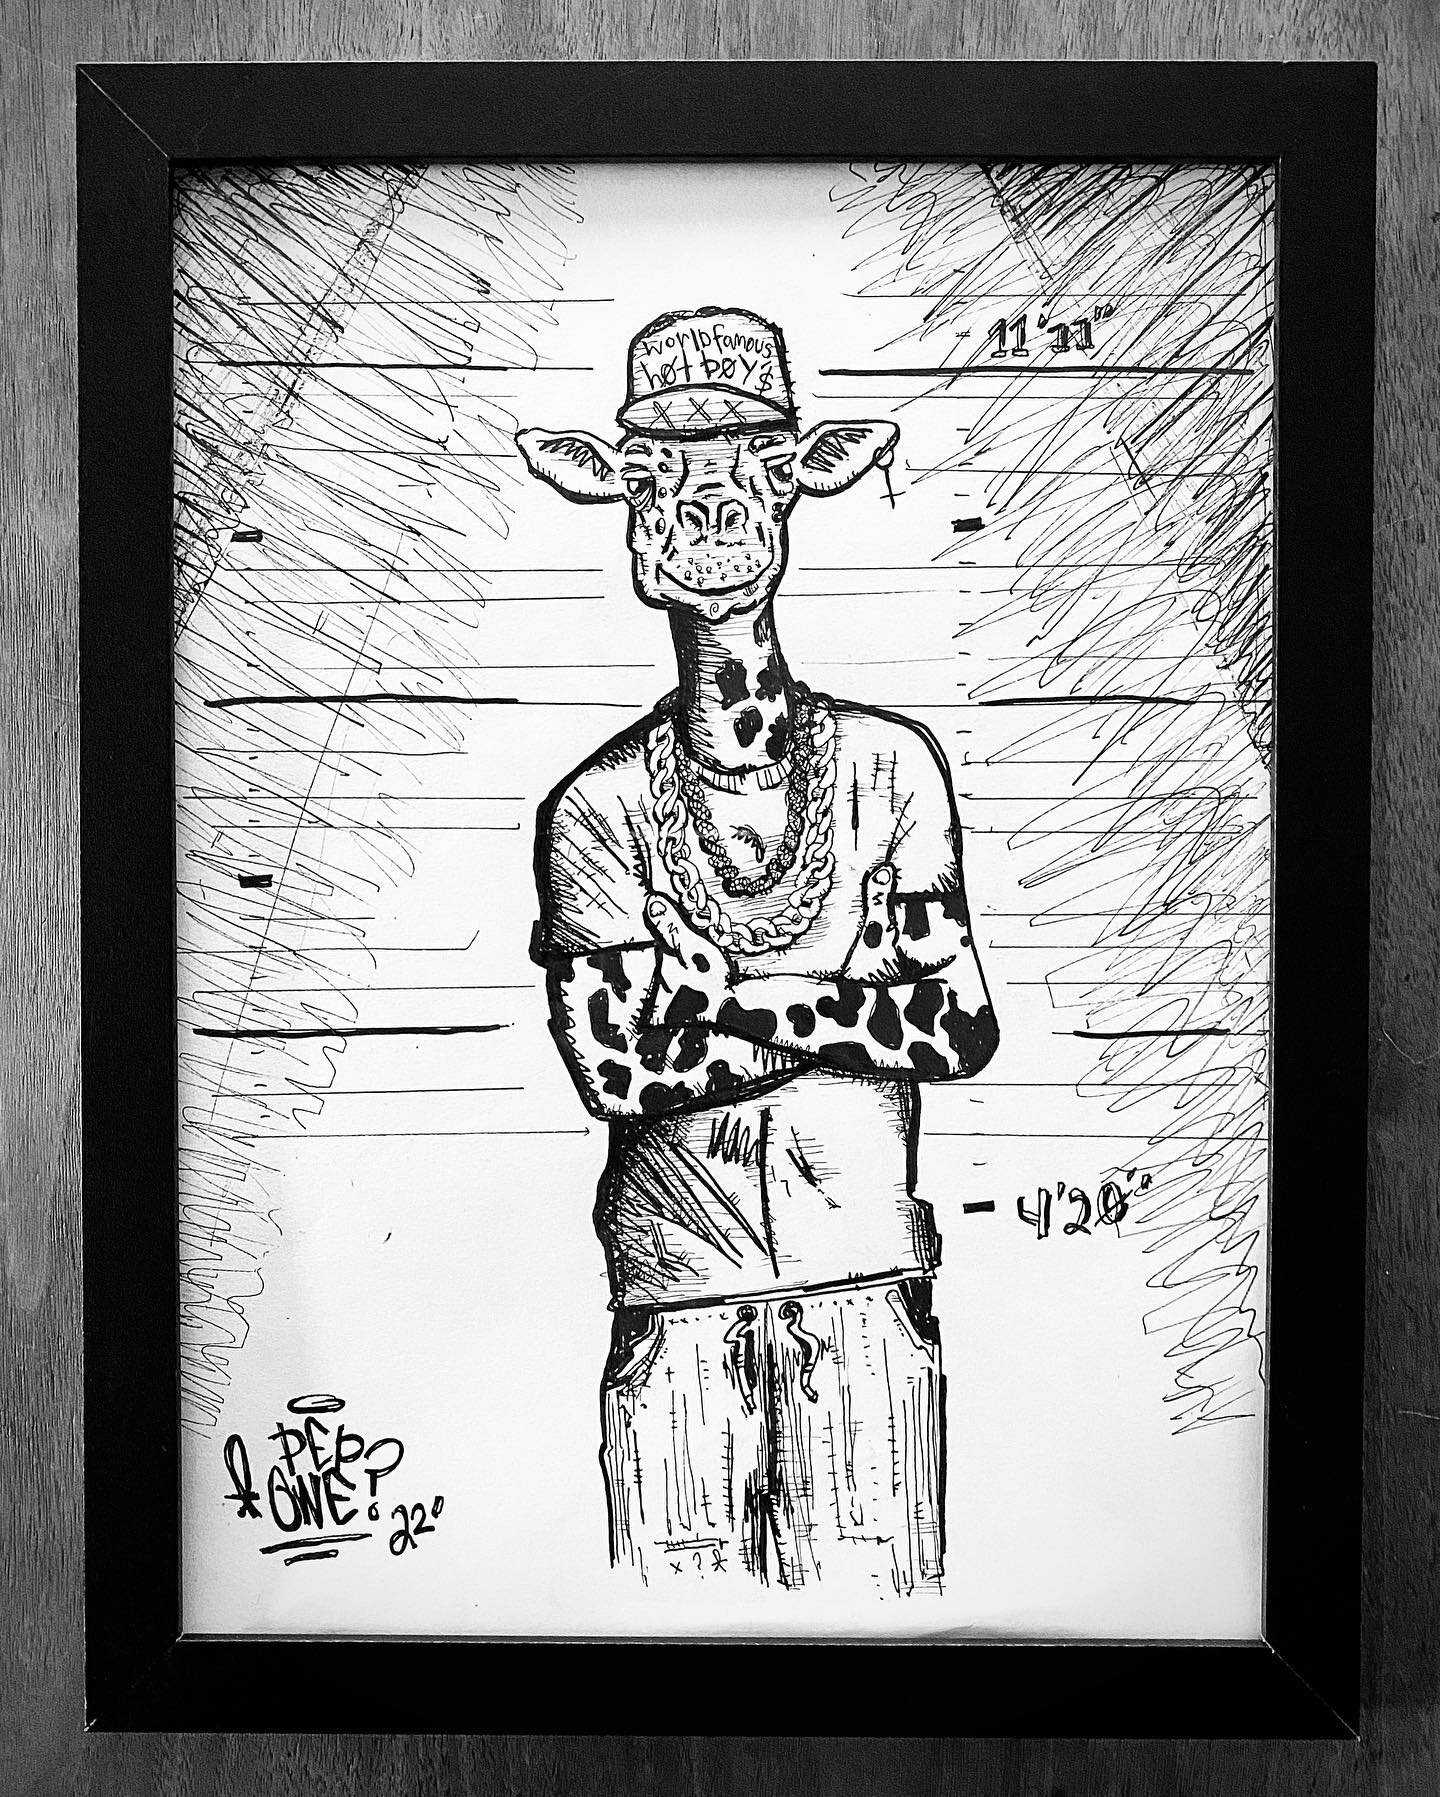 &ldquo;rude boy&rdquo; 💀🦒
9x12 framed for sale

@molotowheadquarters blackliner

#truecrime
#animalkingdom 
#streetart 
#zineart 
#wheatpasteart 
#stickerart 
#lowbrowart 
#graffiti
#parentaladvisory